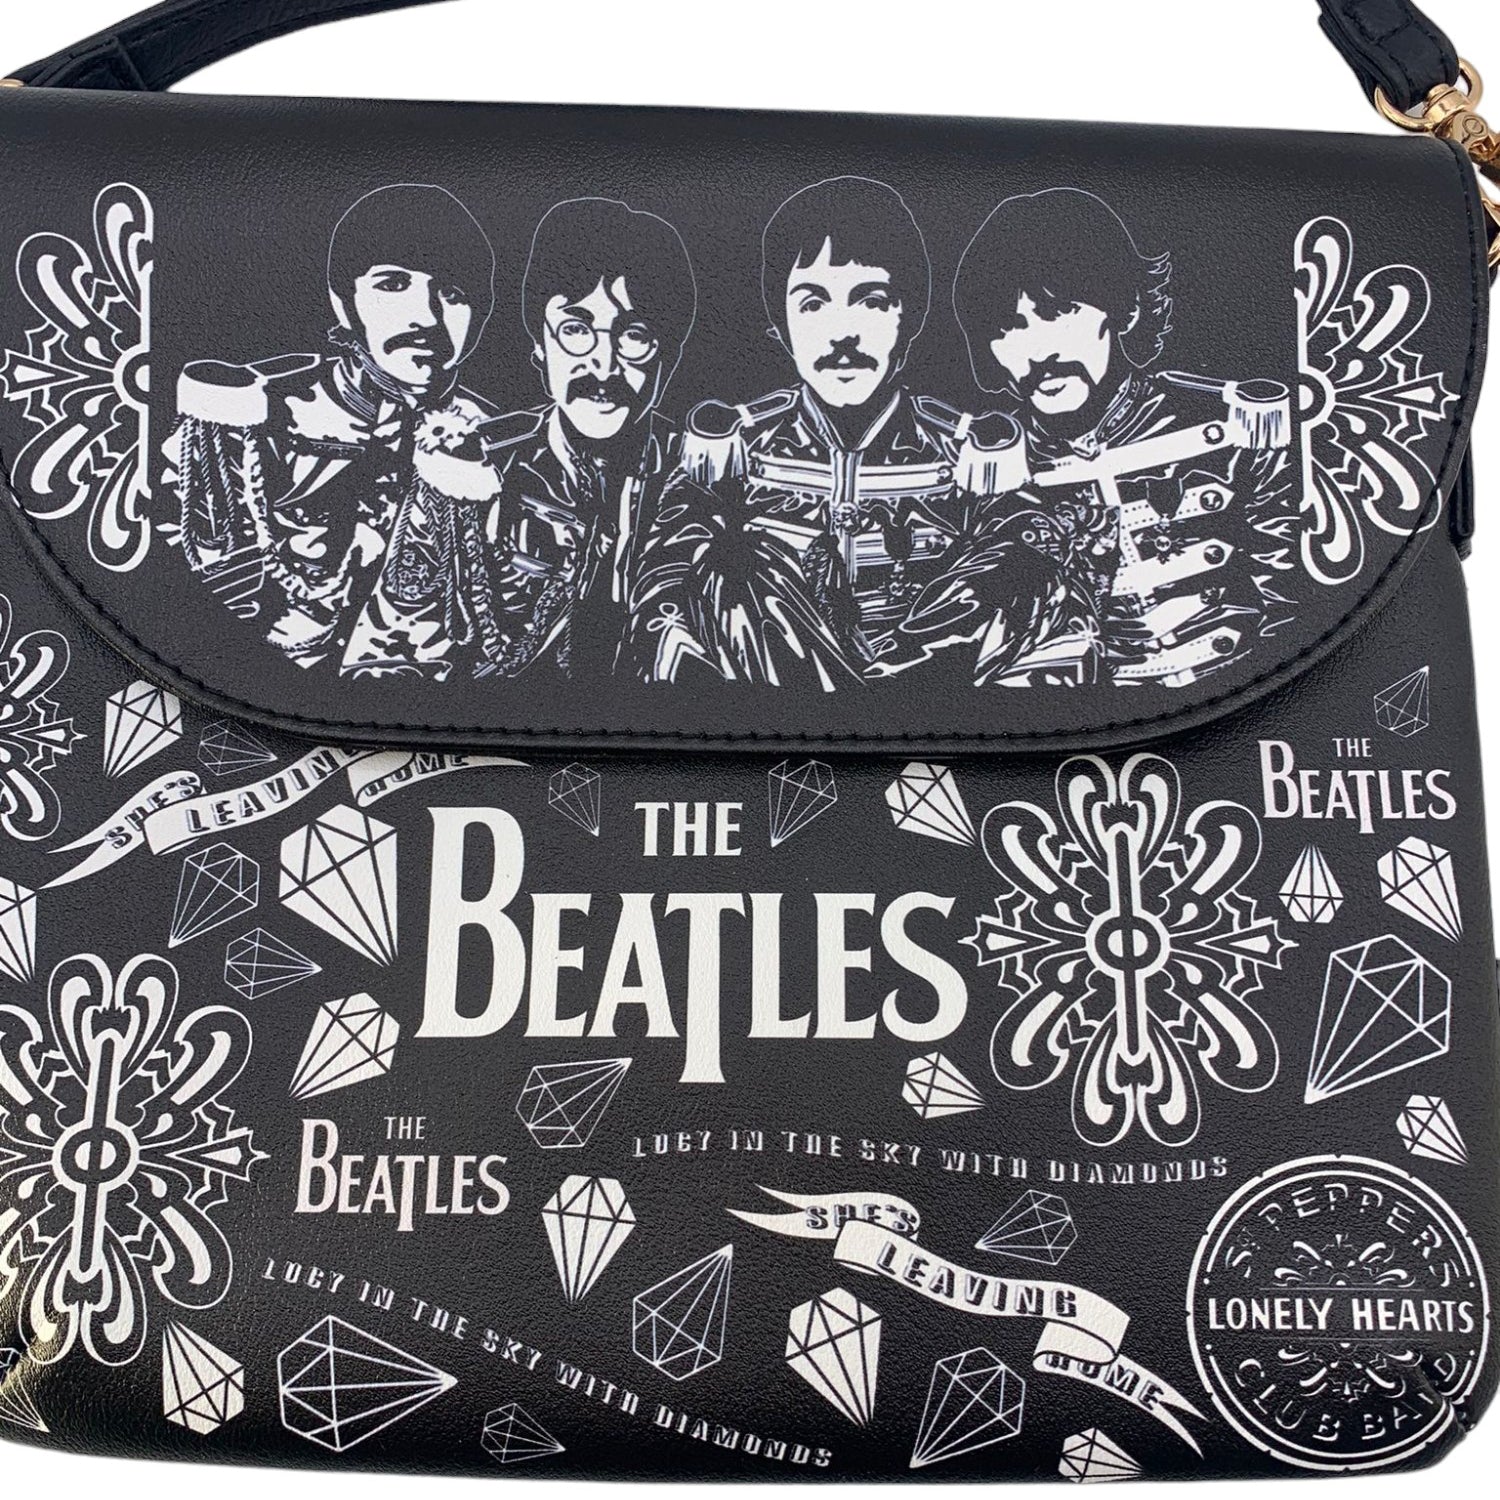 The Beatles Sgt. Pepper Mini Bag